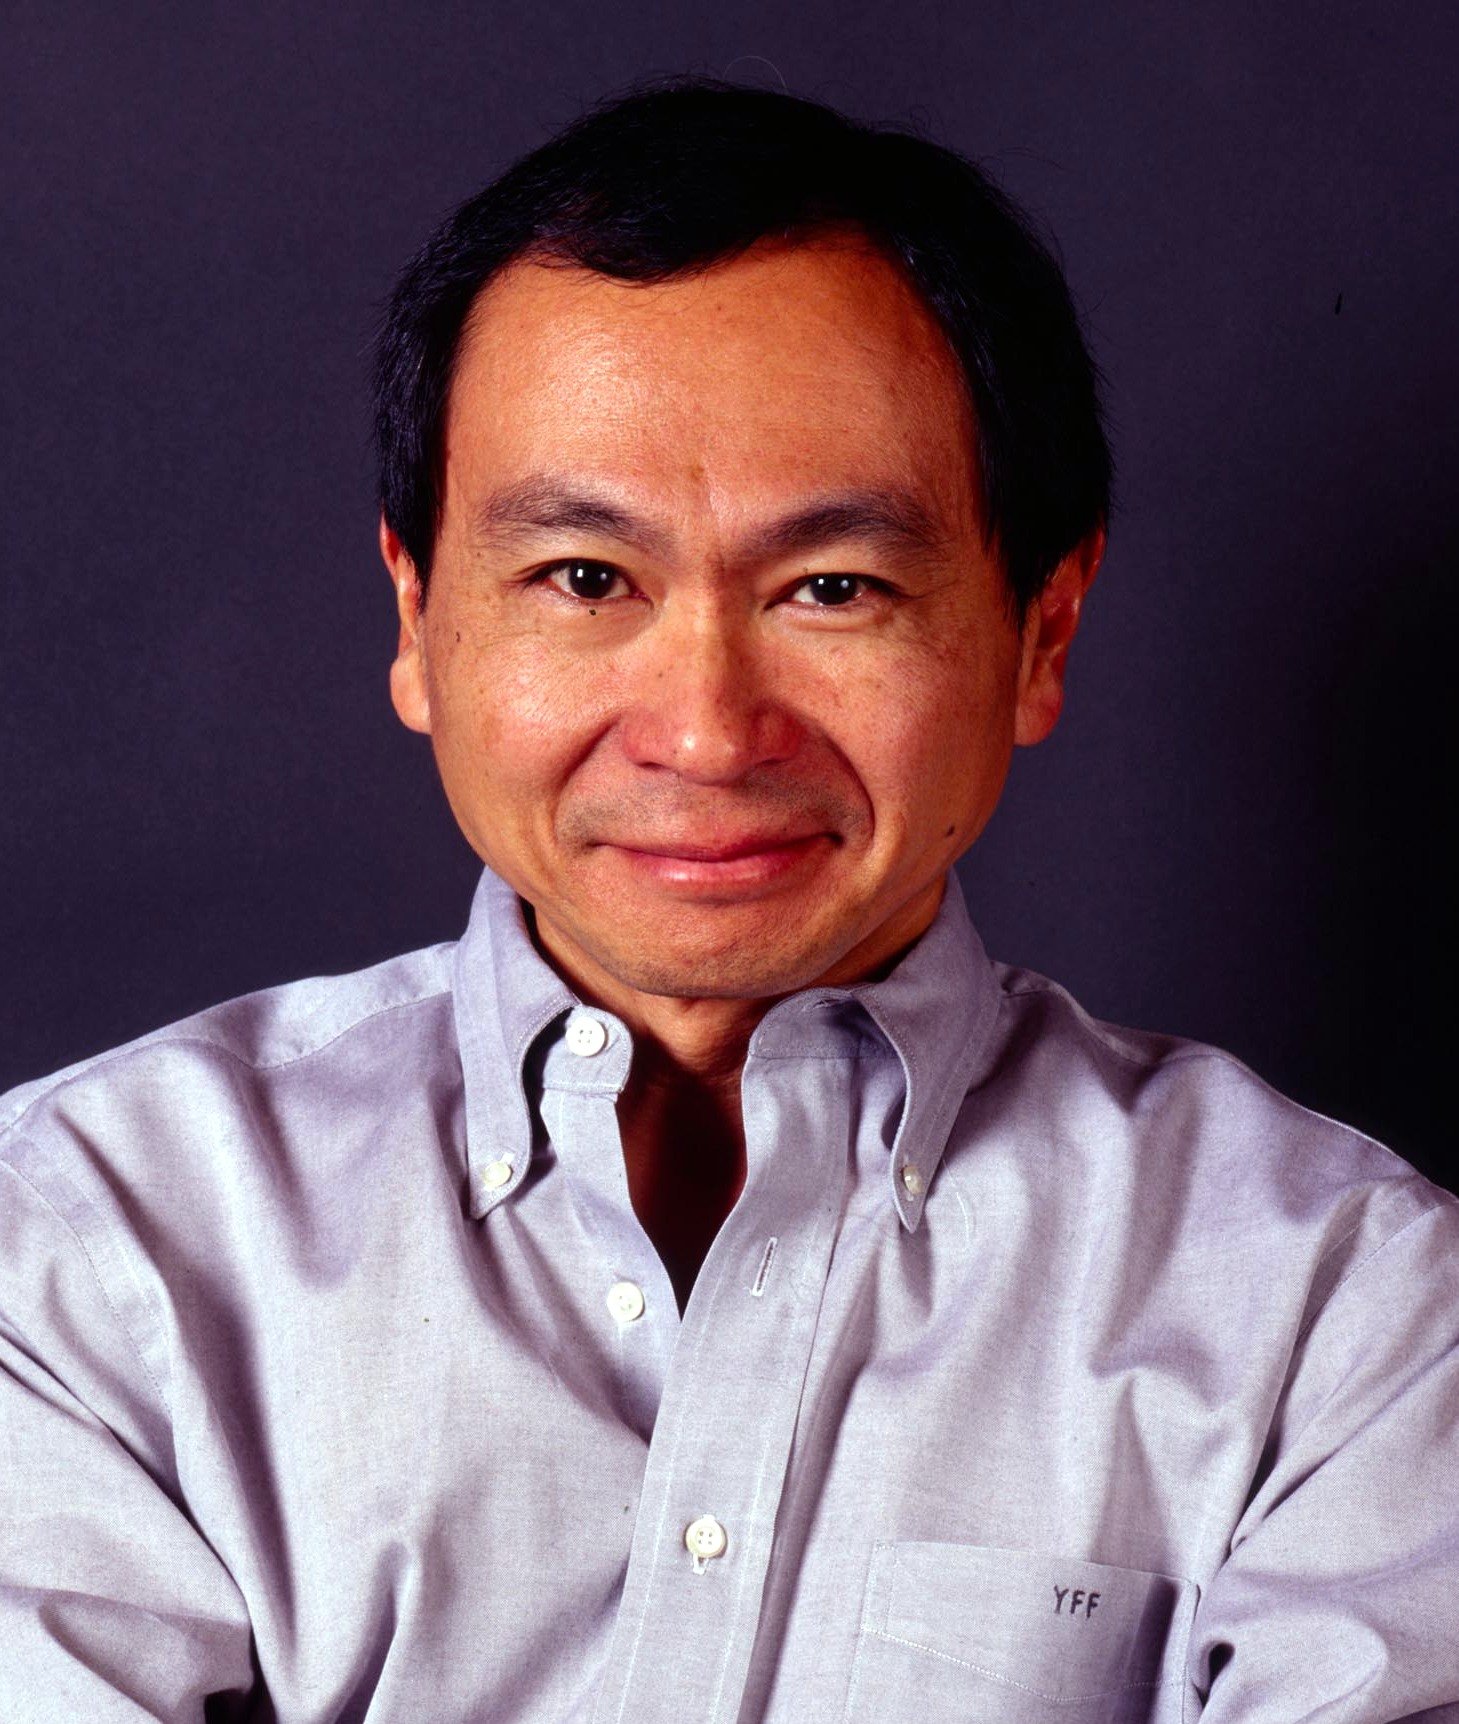 Francis Fukuyama Speaker